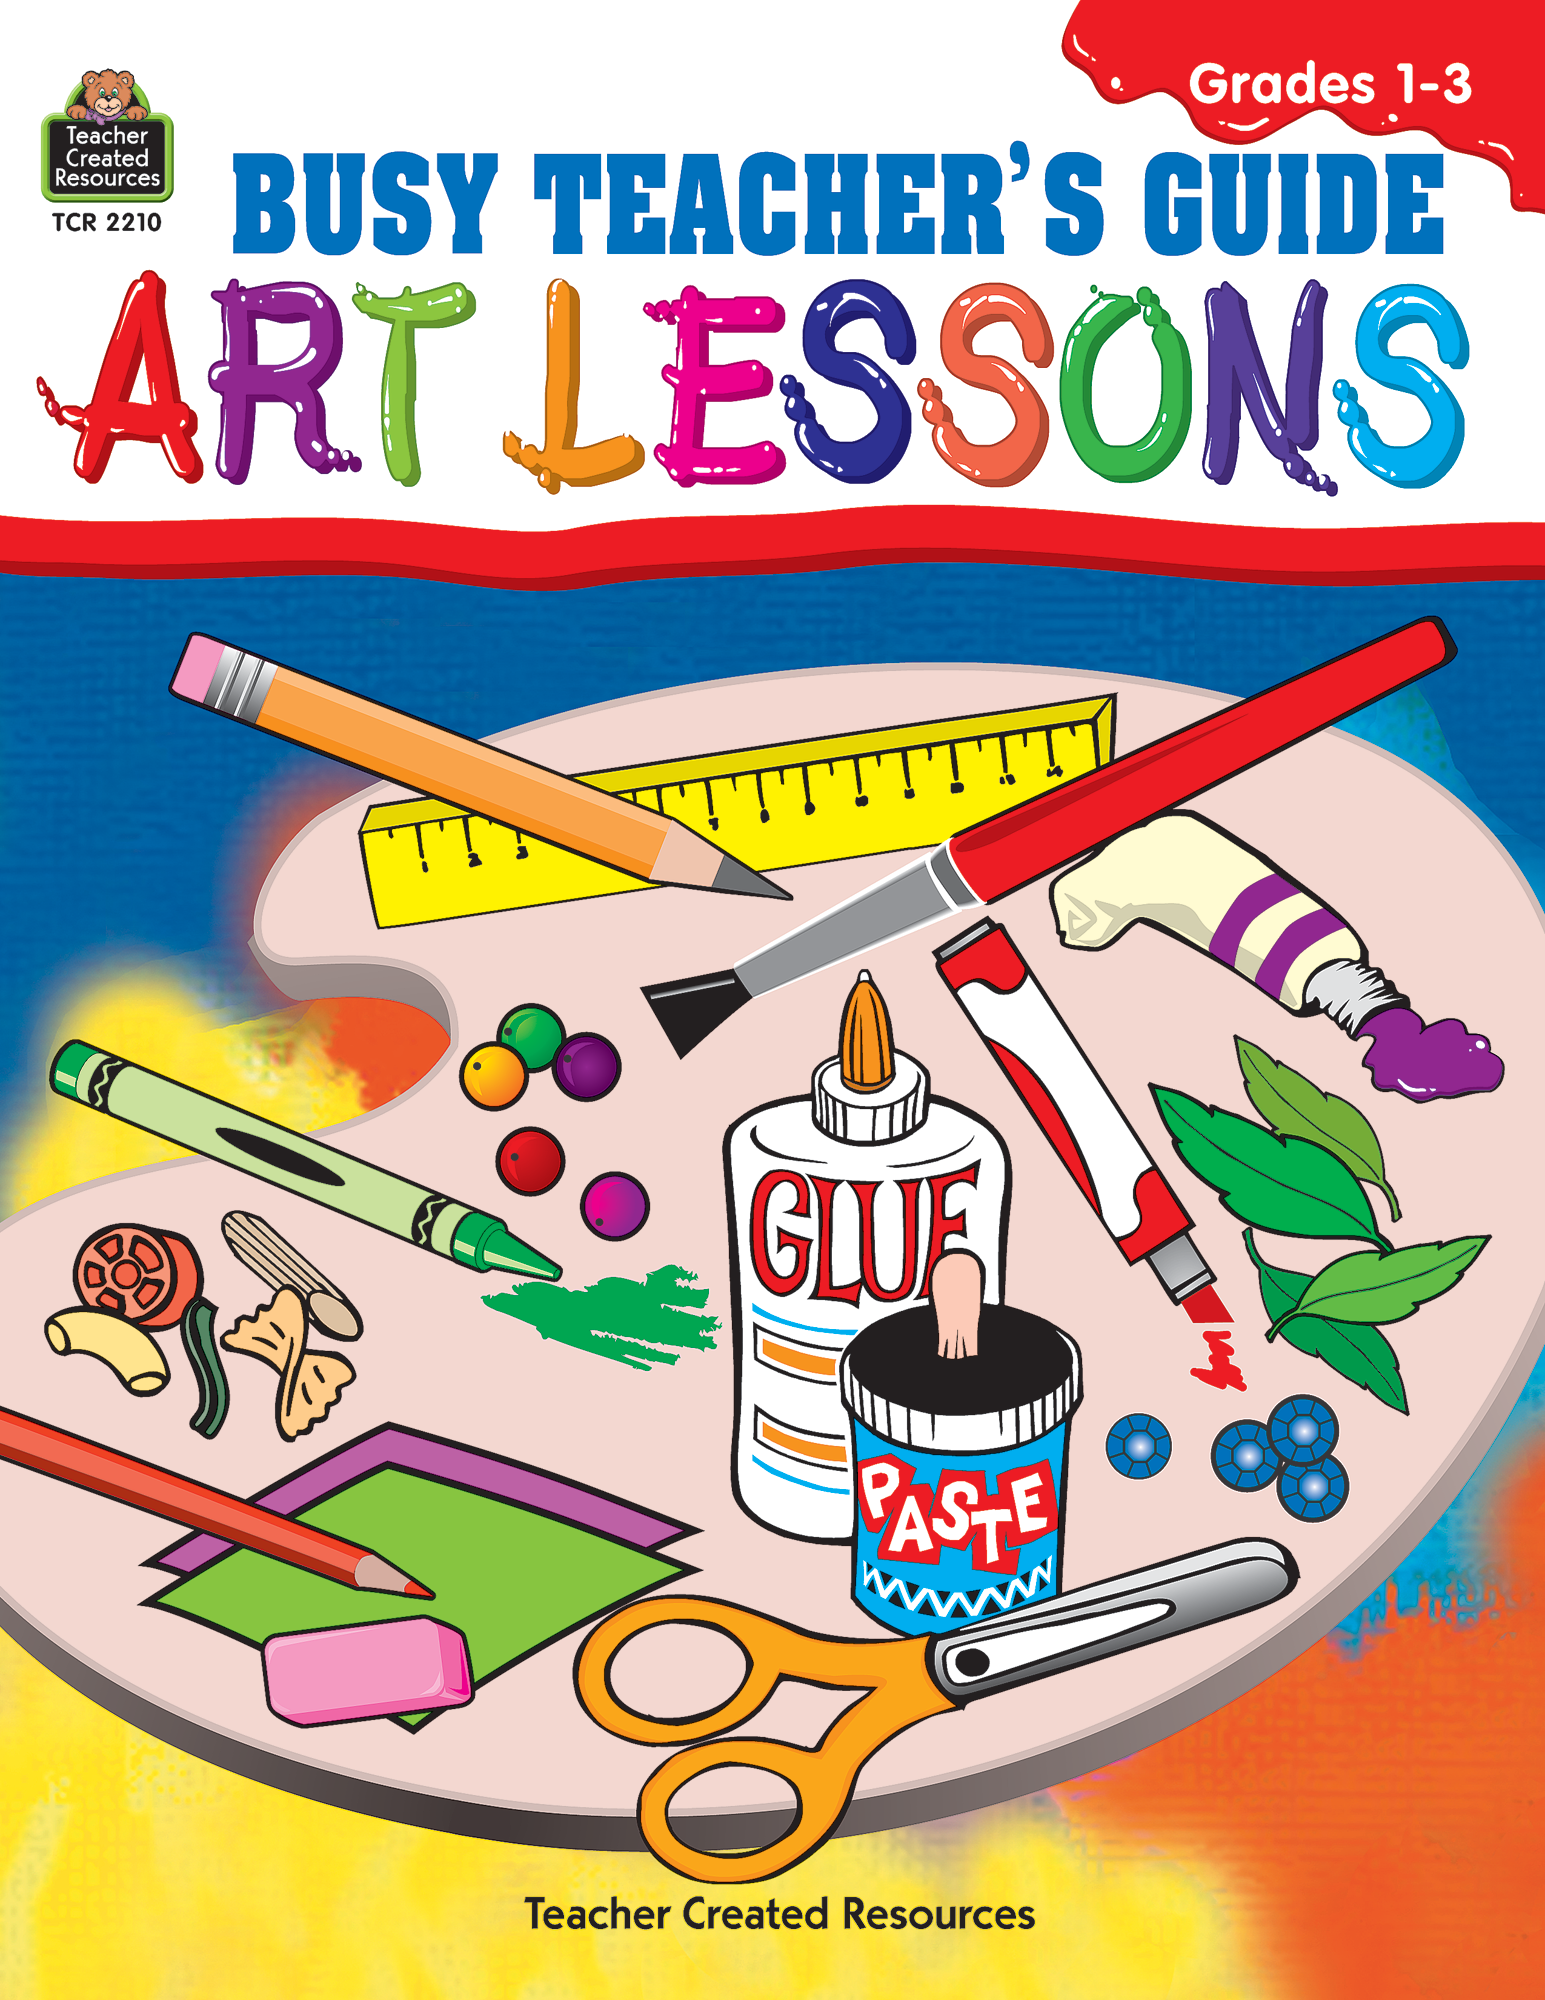 The art teacher was. Art Lesson. Teacher creates. Lesson,, busy,,. Art Lessons poster.